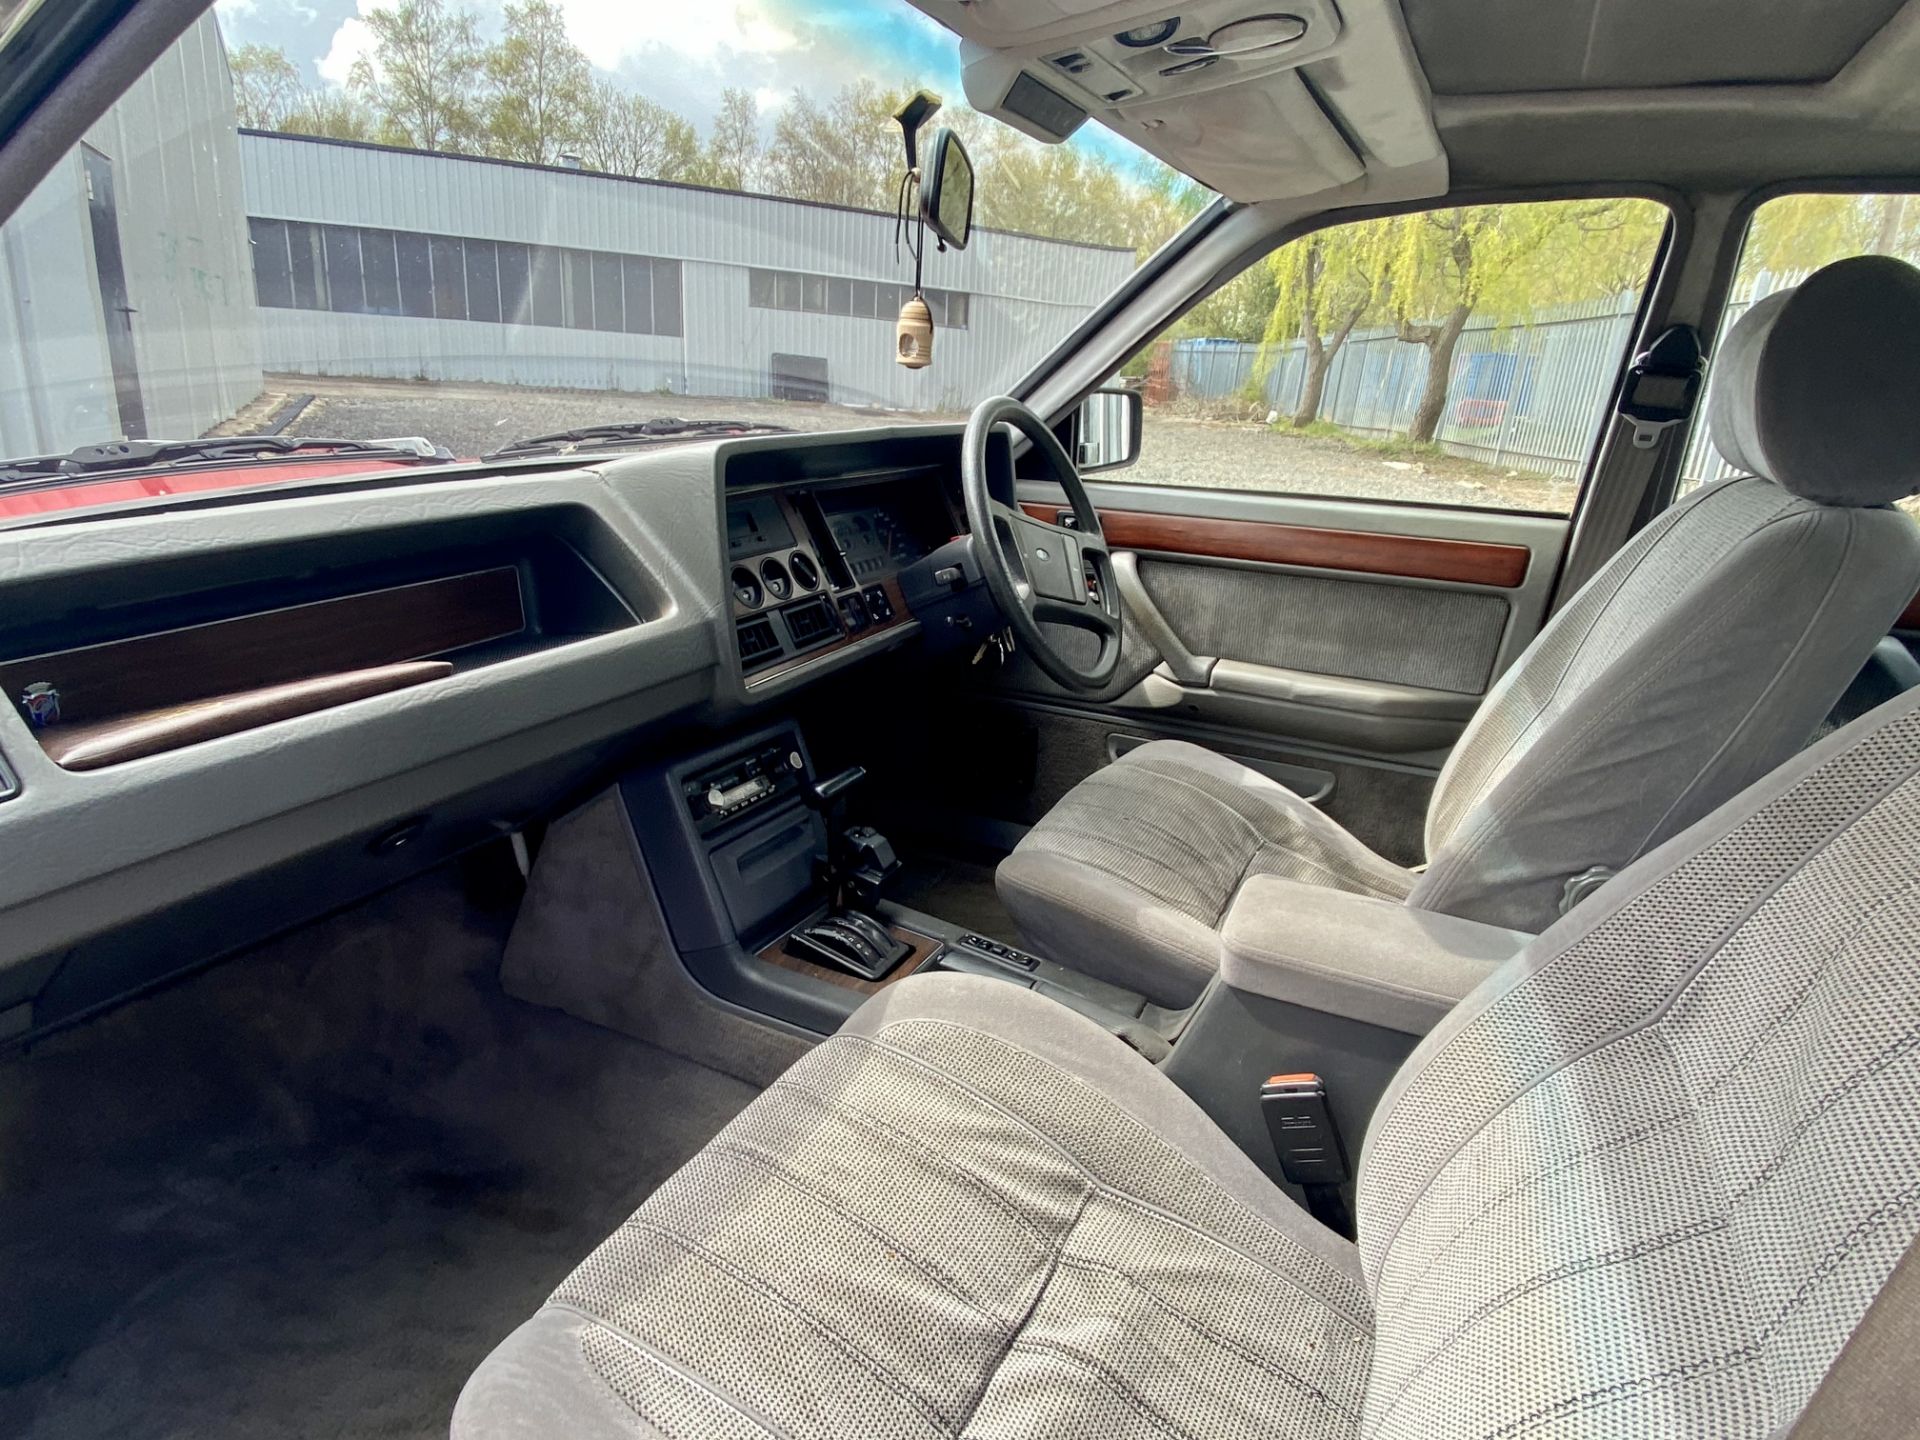 Ford Granada Ghia 3.0 - Image 12 of 51